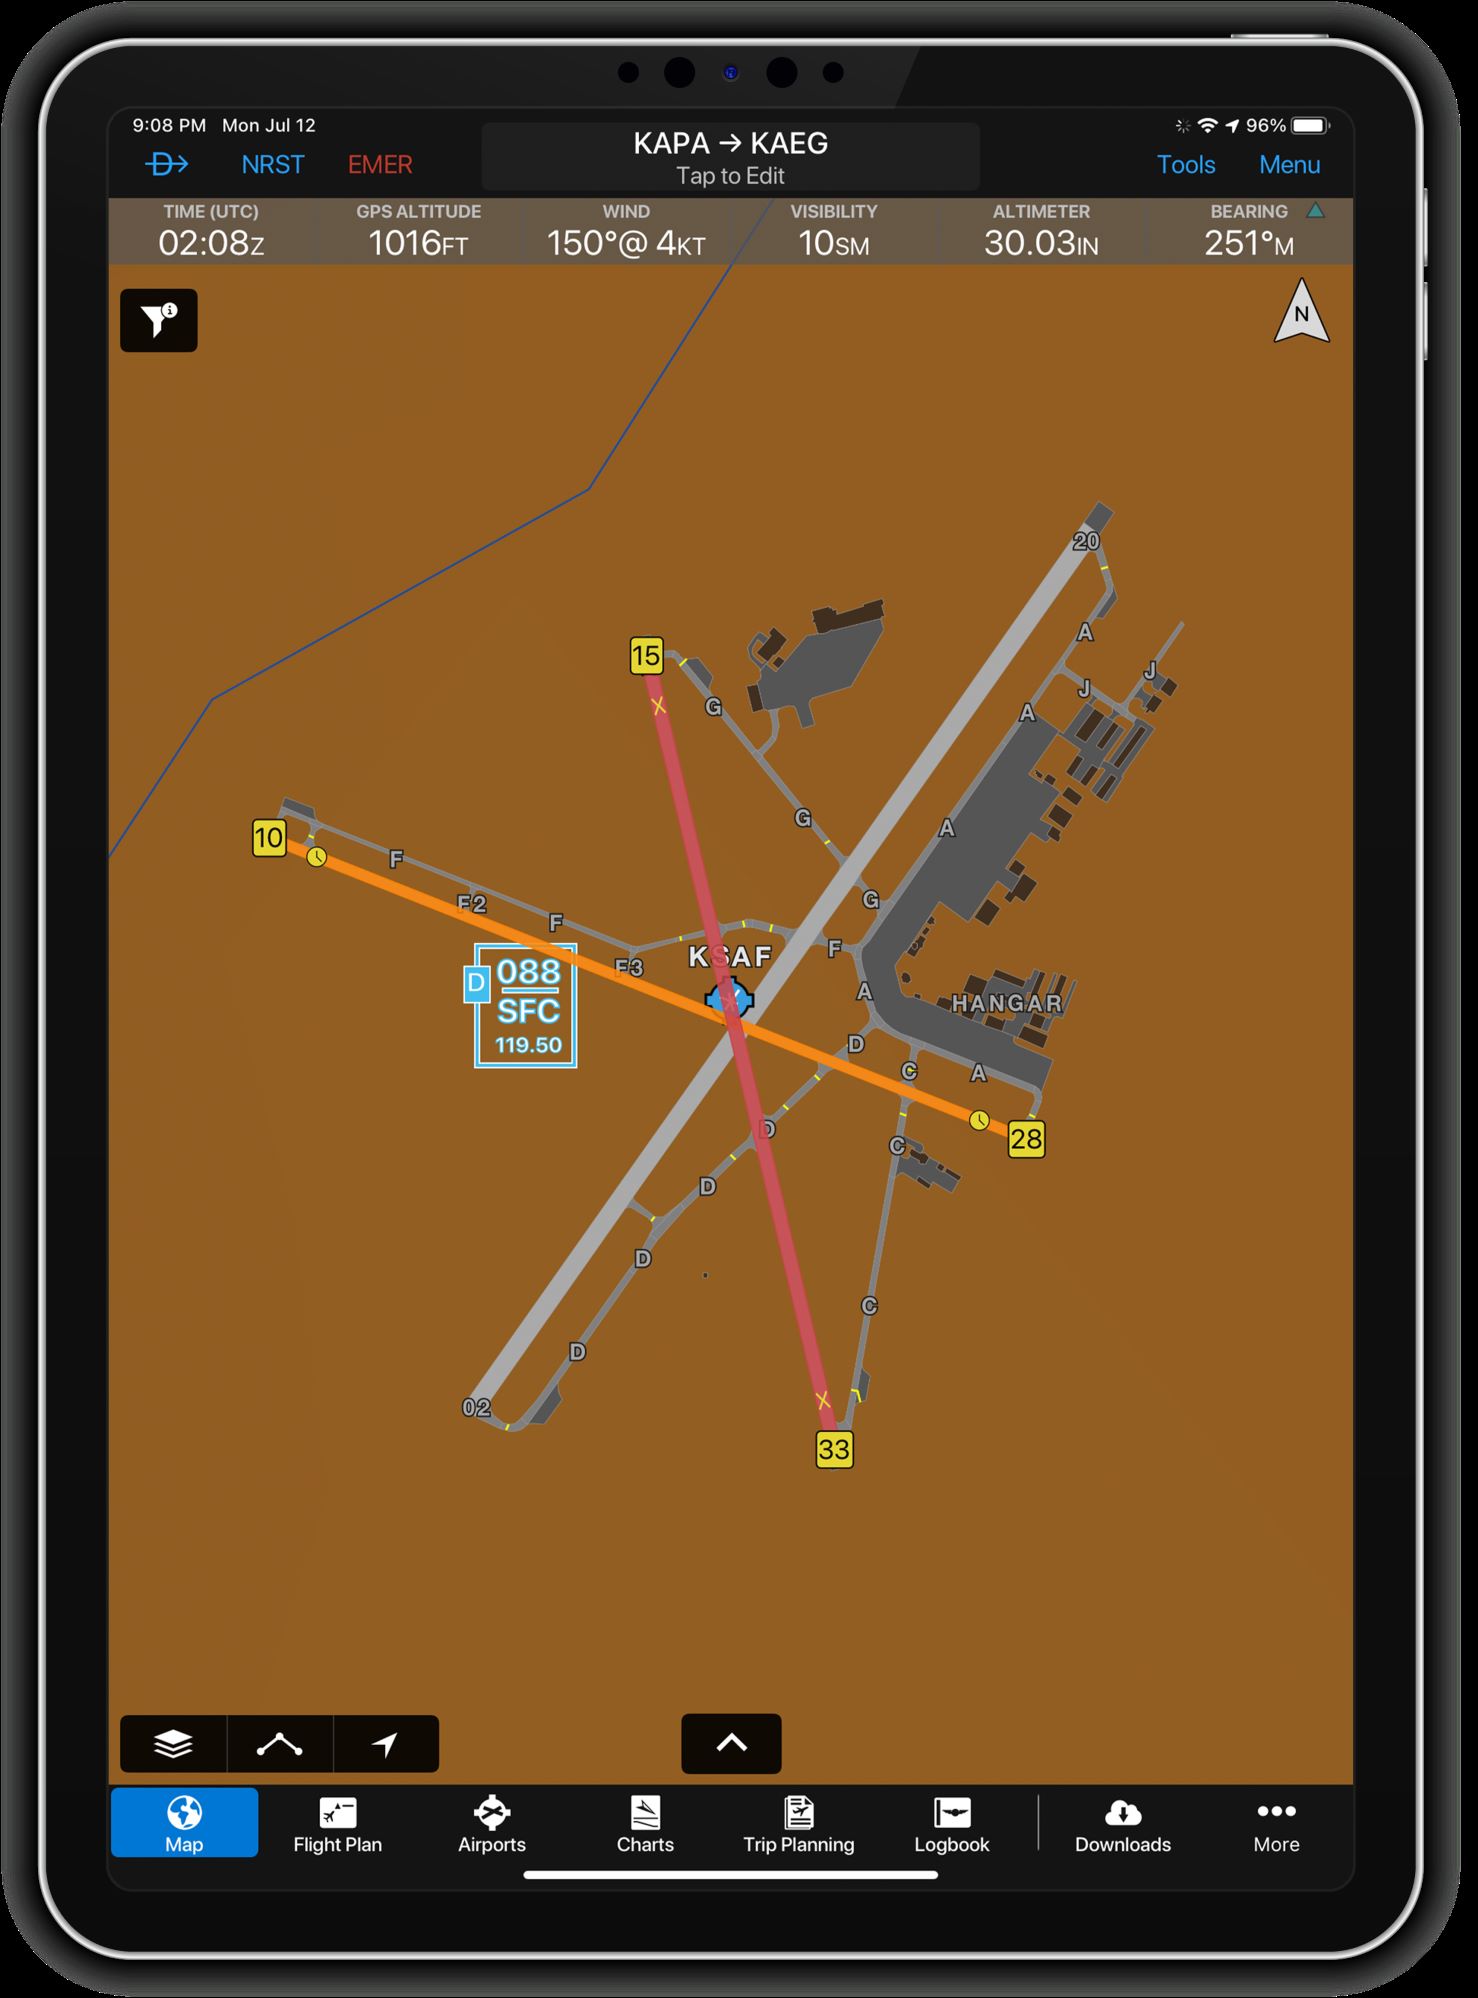 bølge Saucer lige ud Garmin Pilot app adds new terminal environment NOTAM alerts and graphical  runway closures - Garmin Newsroom